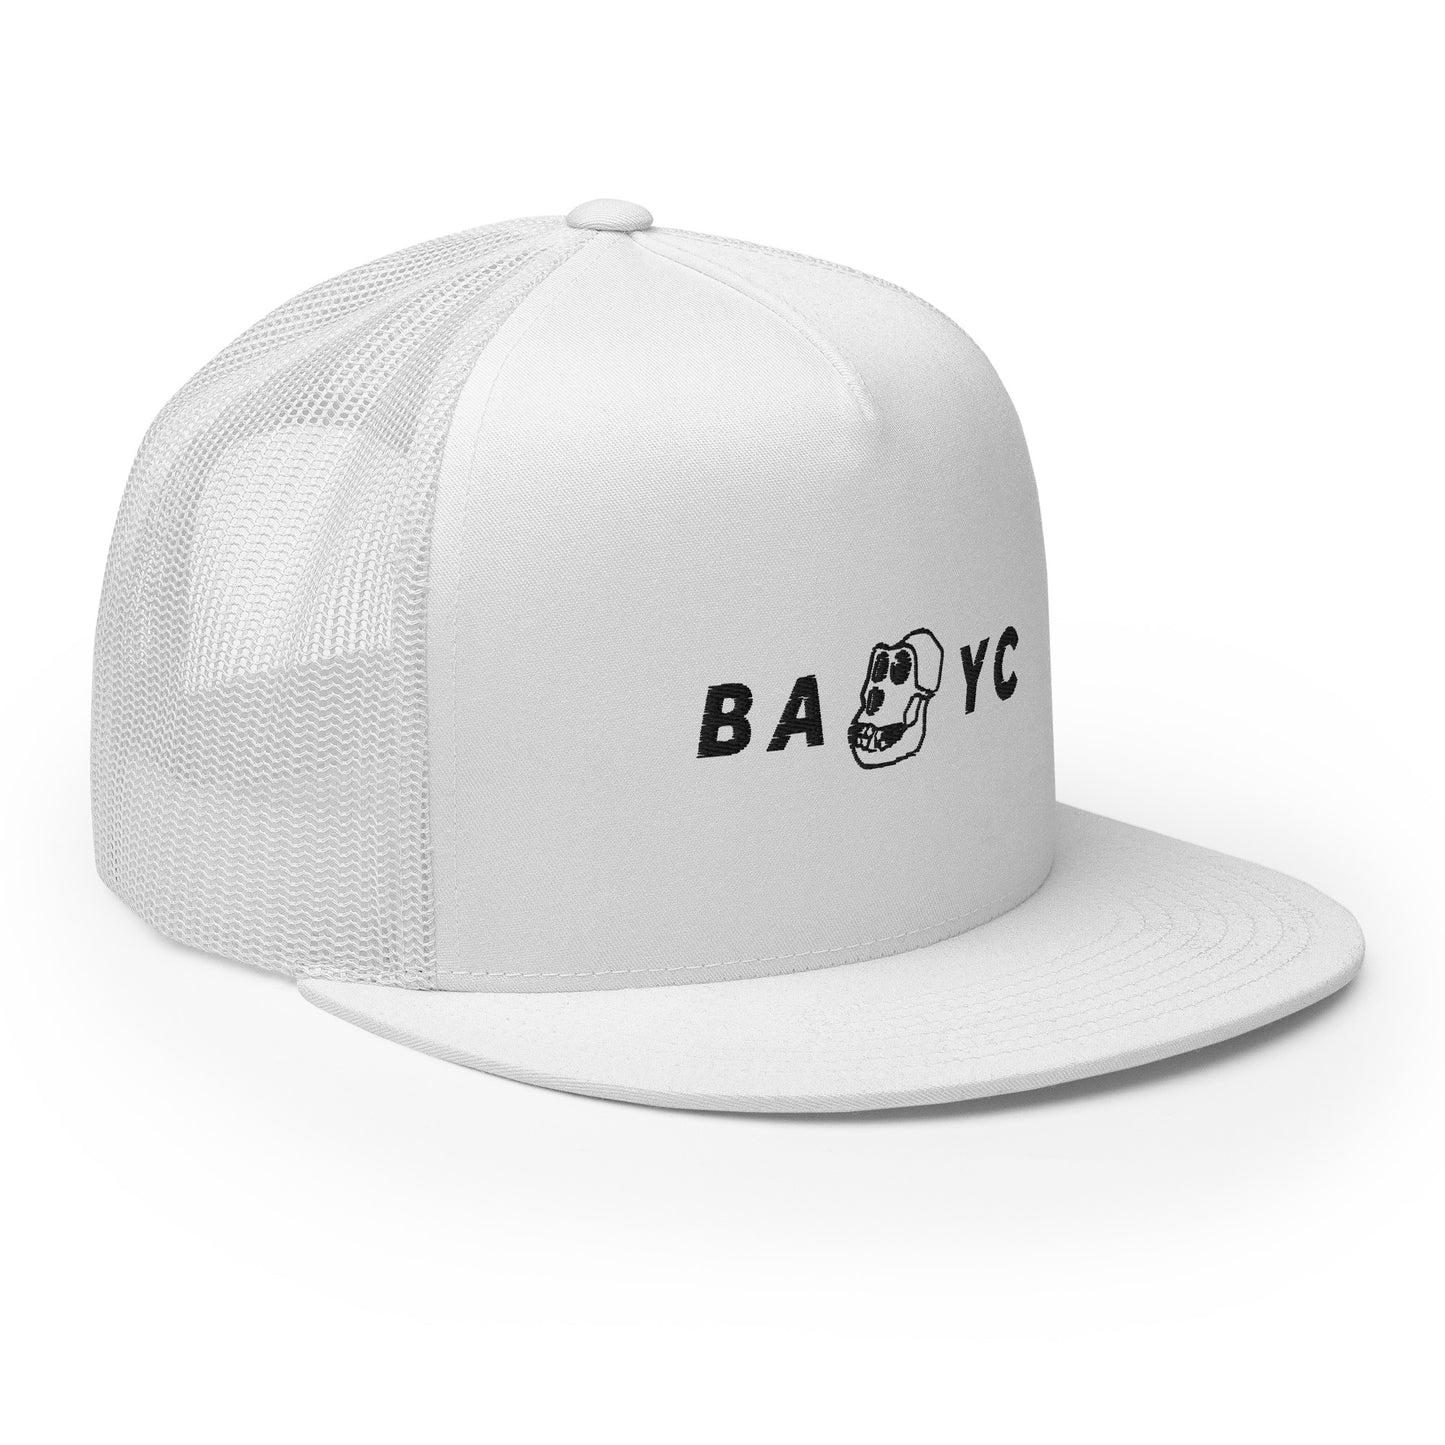 BAYC Snapback Cap